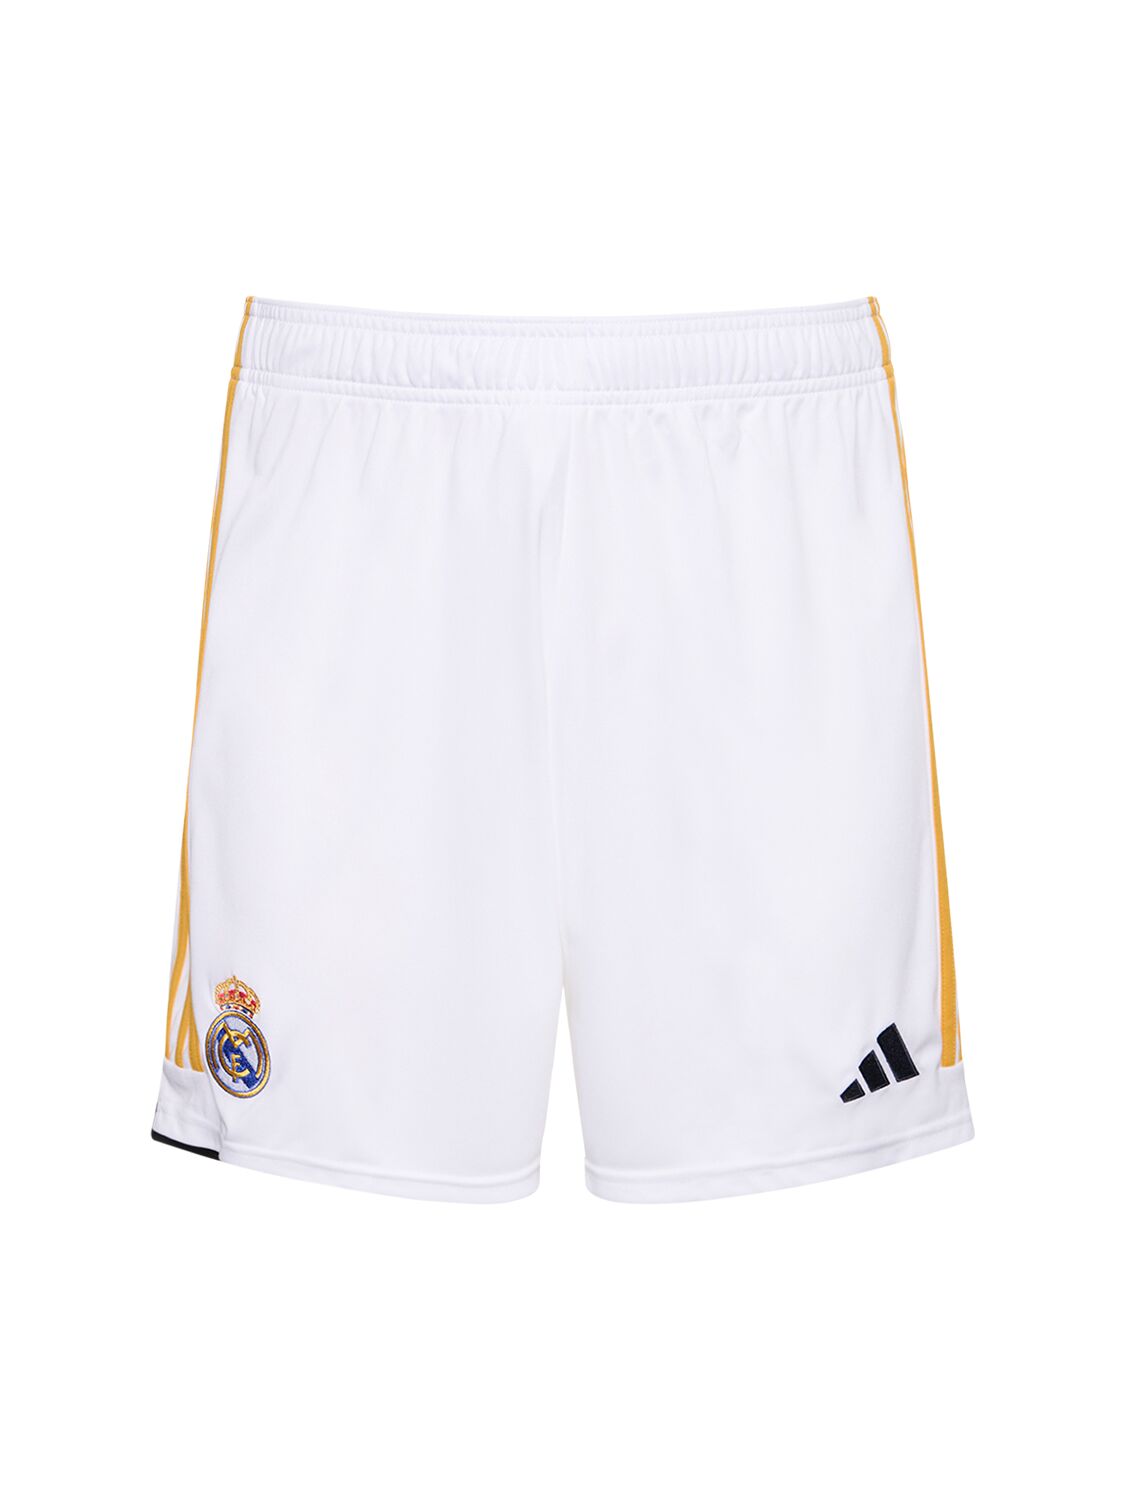 Adidas Originals Real Madrid Shorts In White